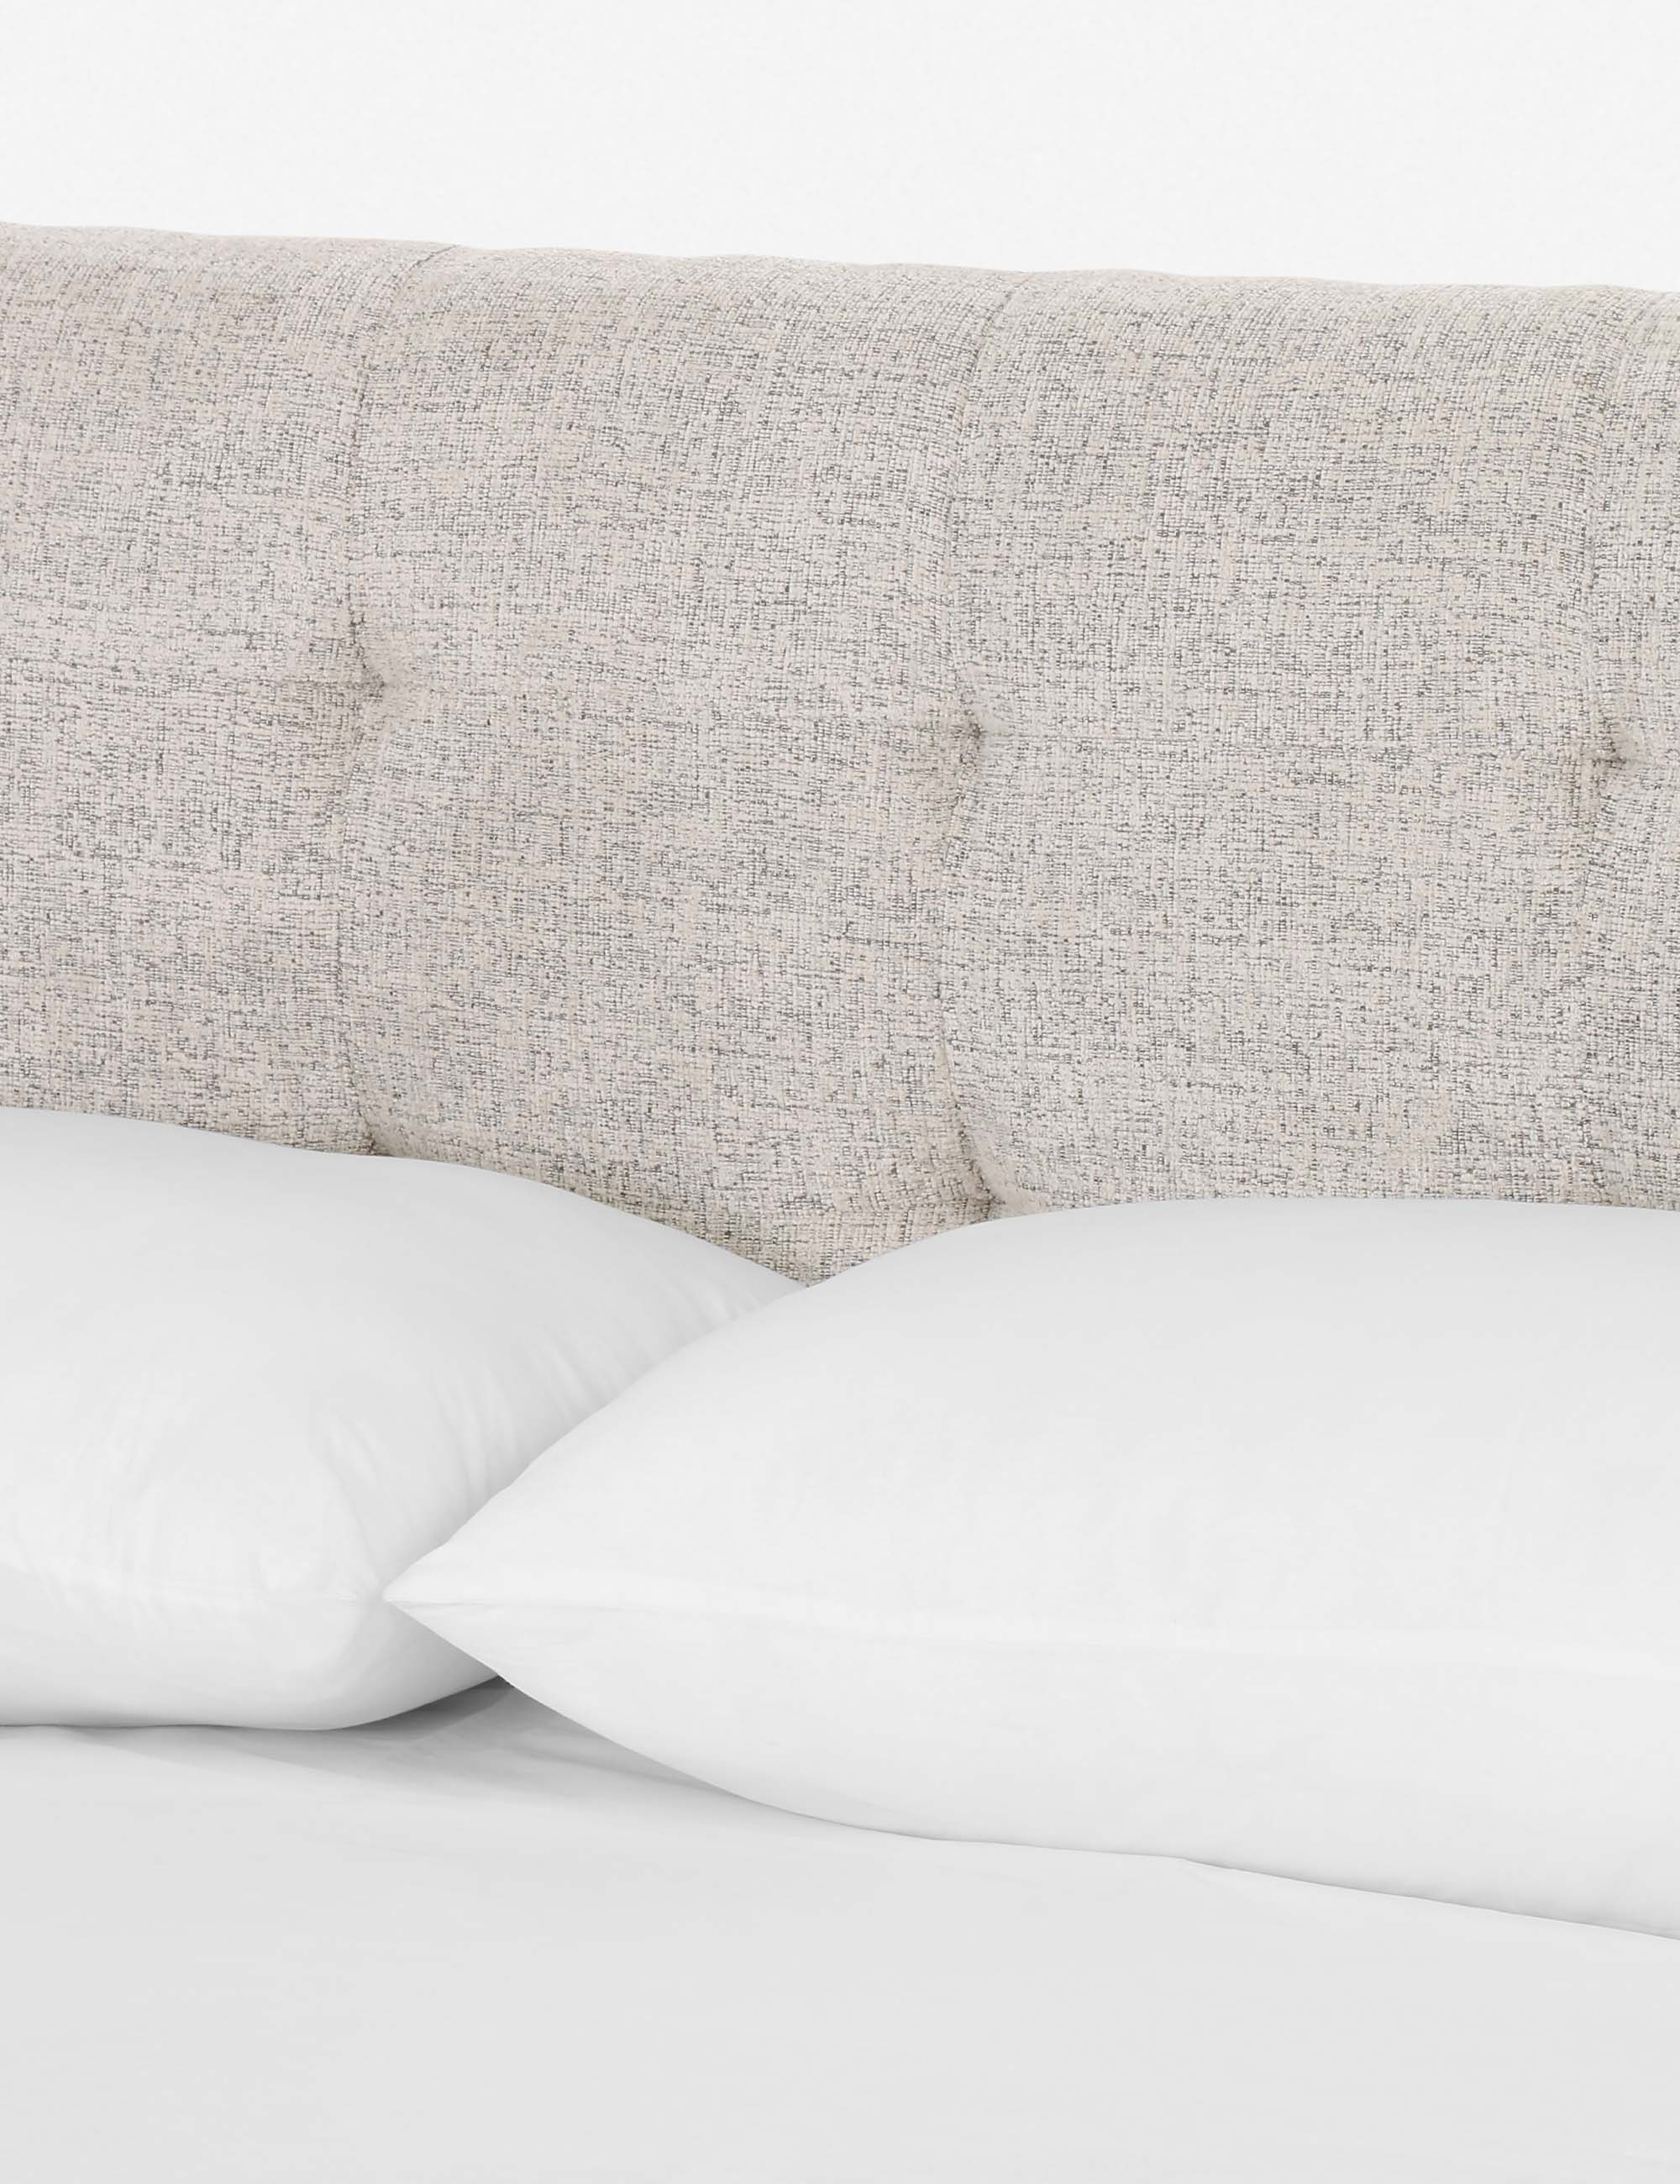 Vedette Queen Bed, Plushtone Linen - Image 5